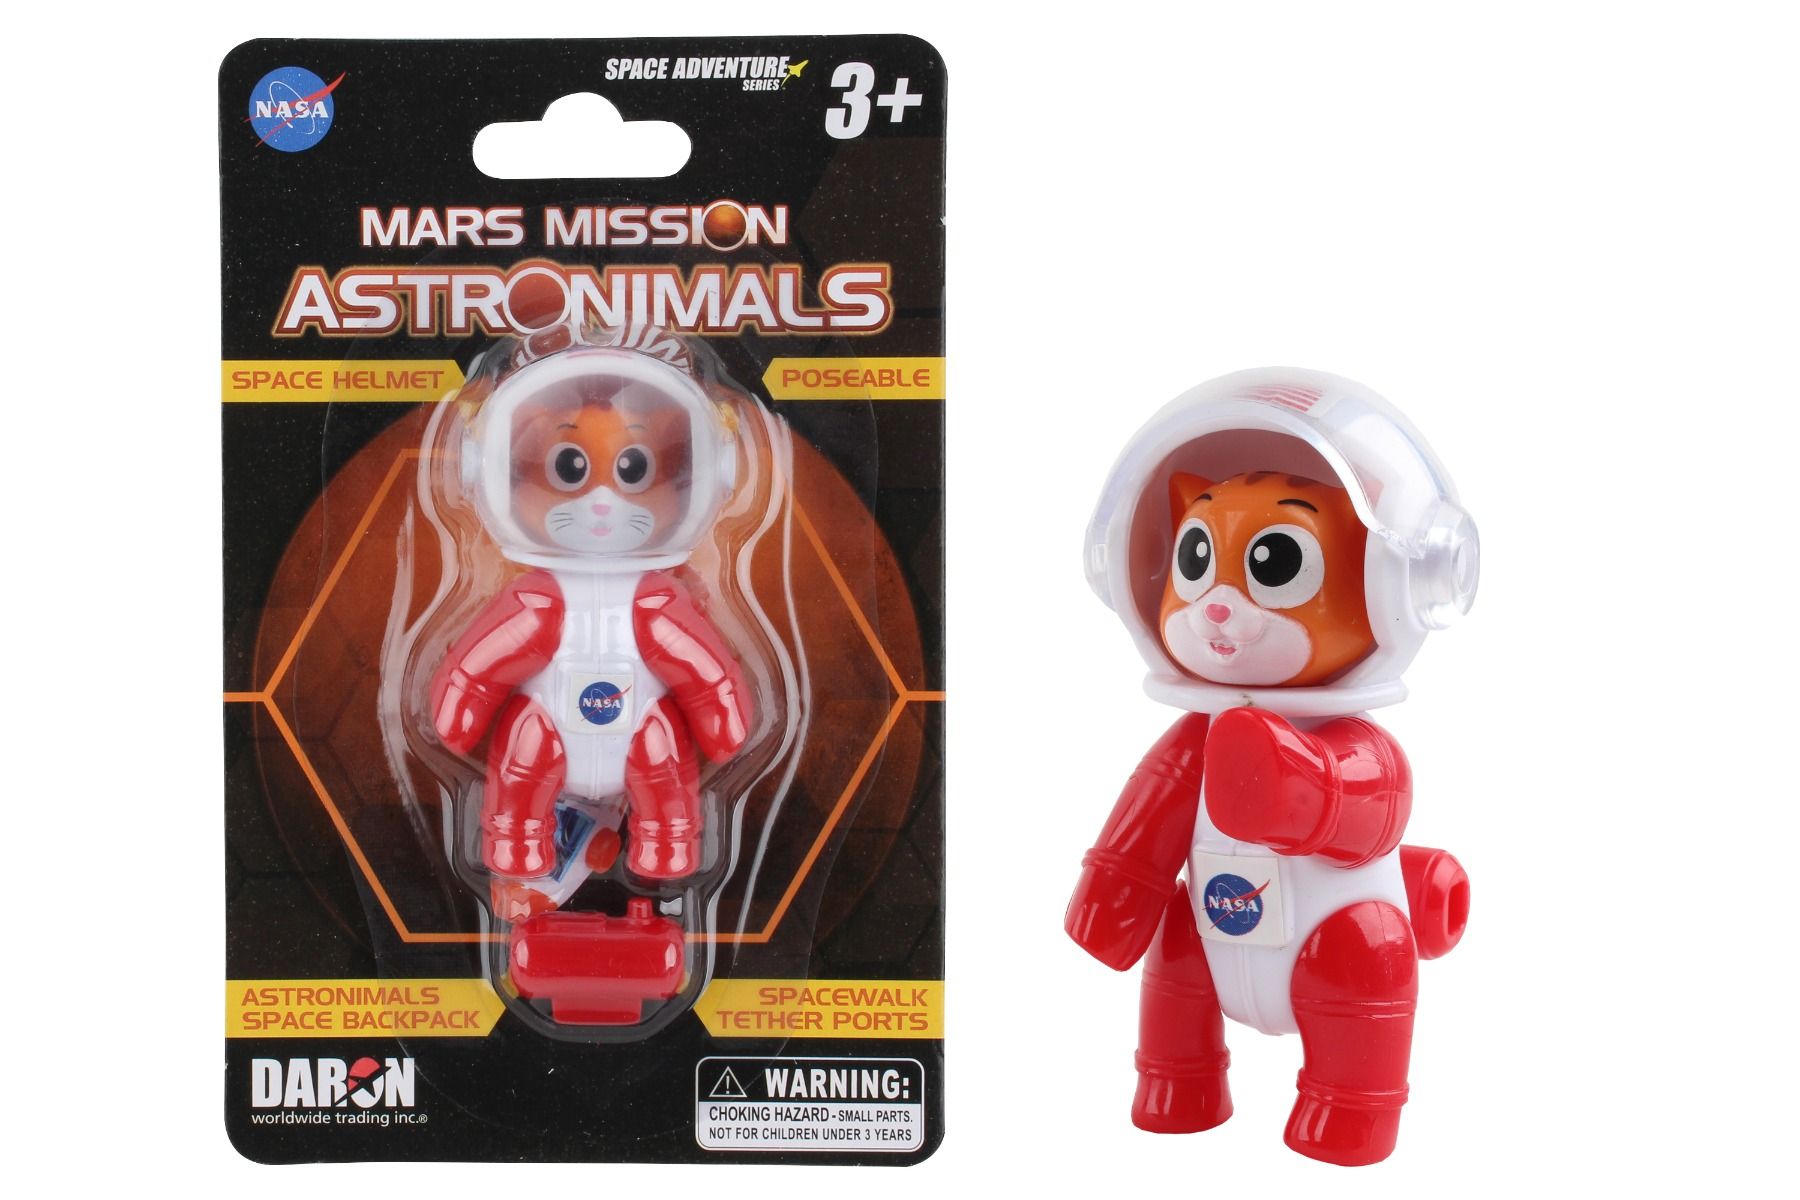 NASA Space Adventure MARS Mission Astronimals Figure